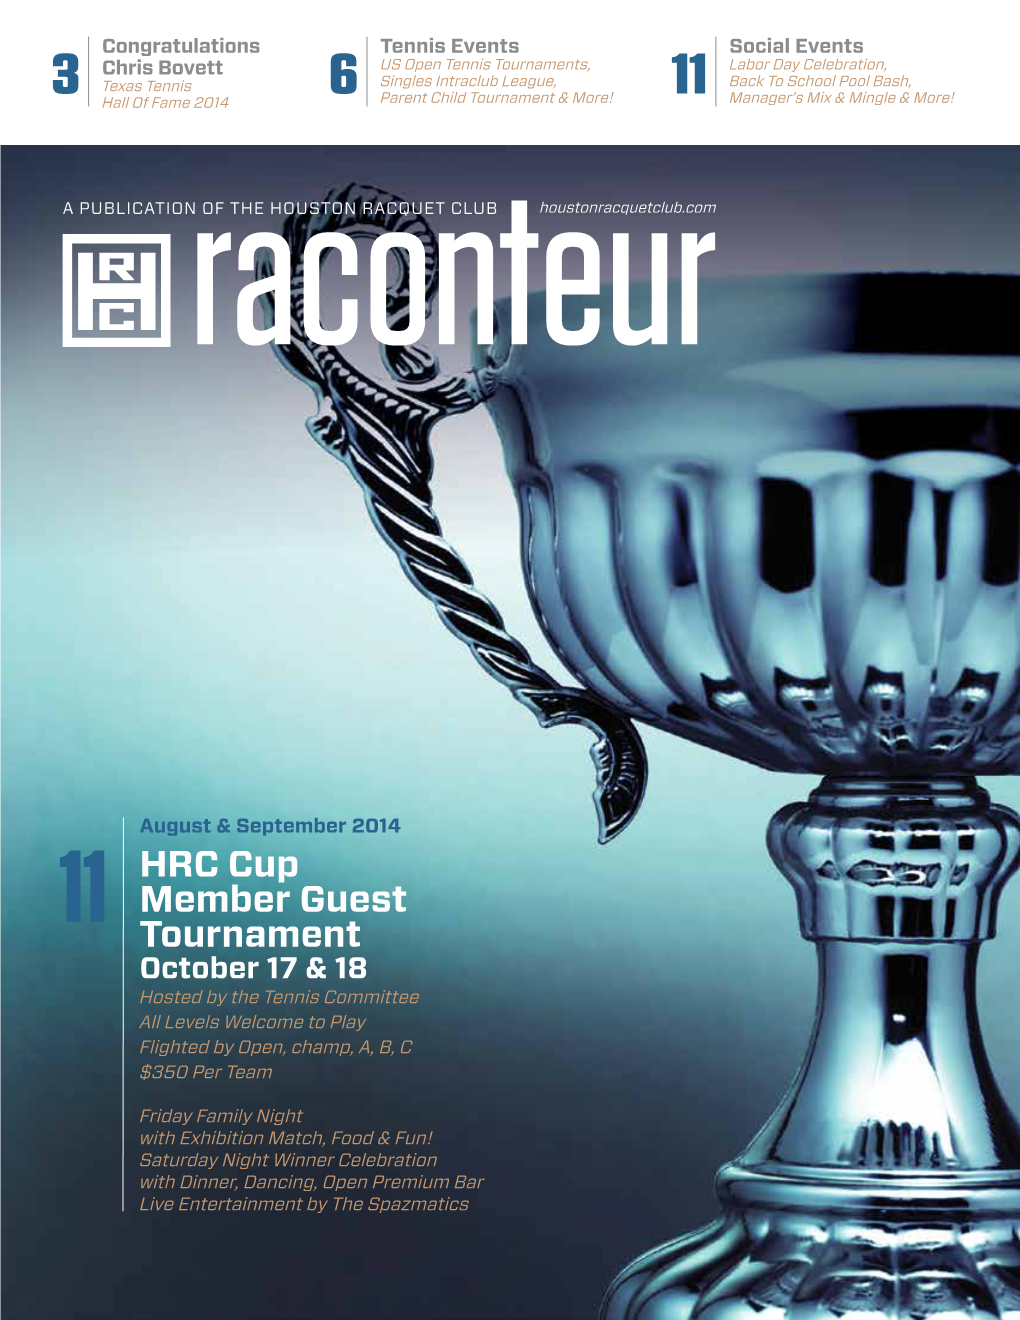 HRC Cup Member Guest Tournament